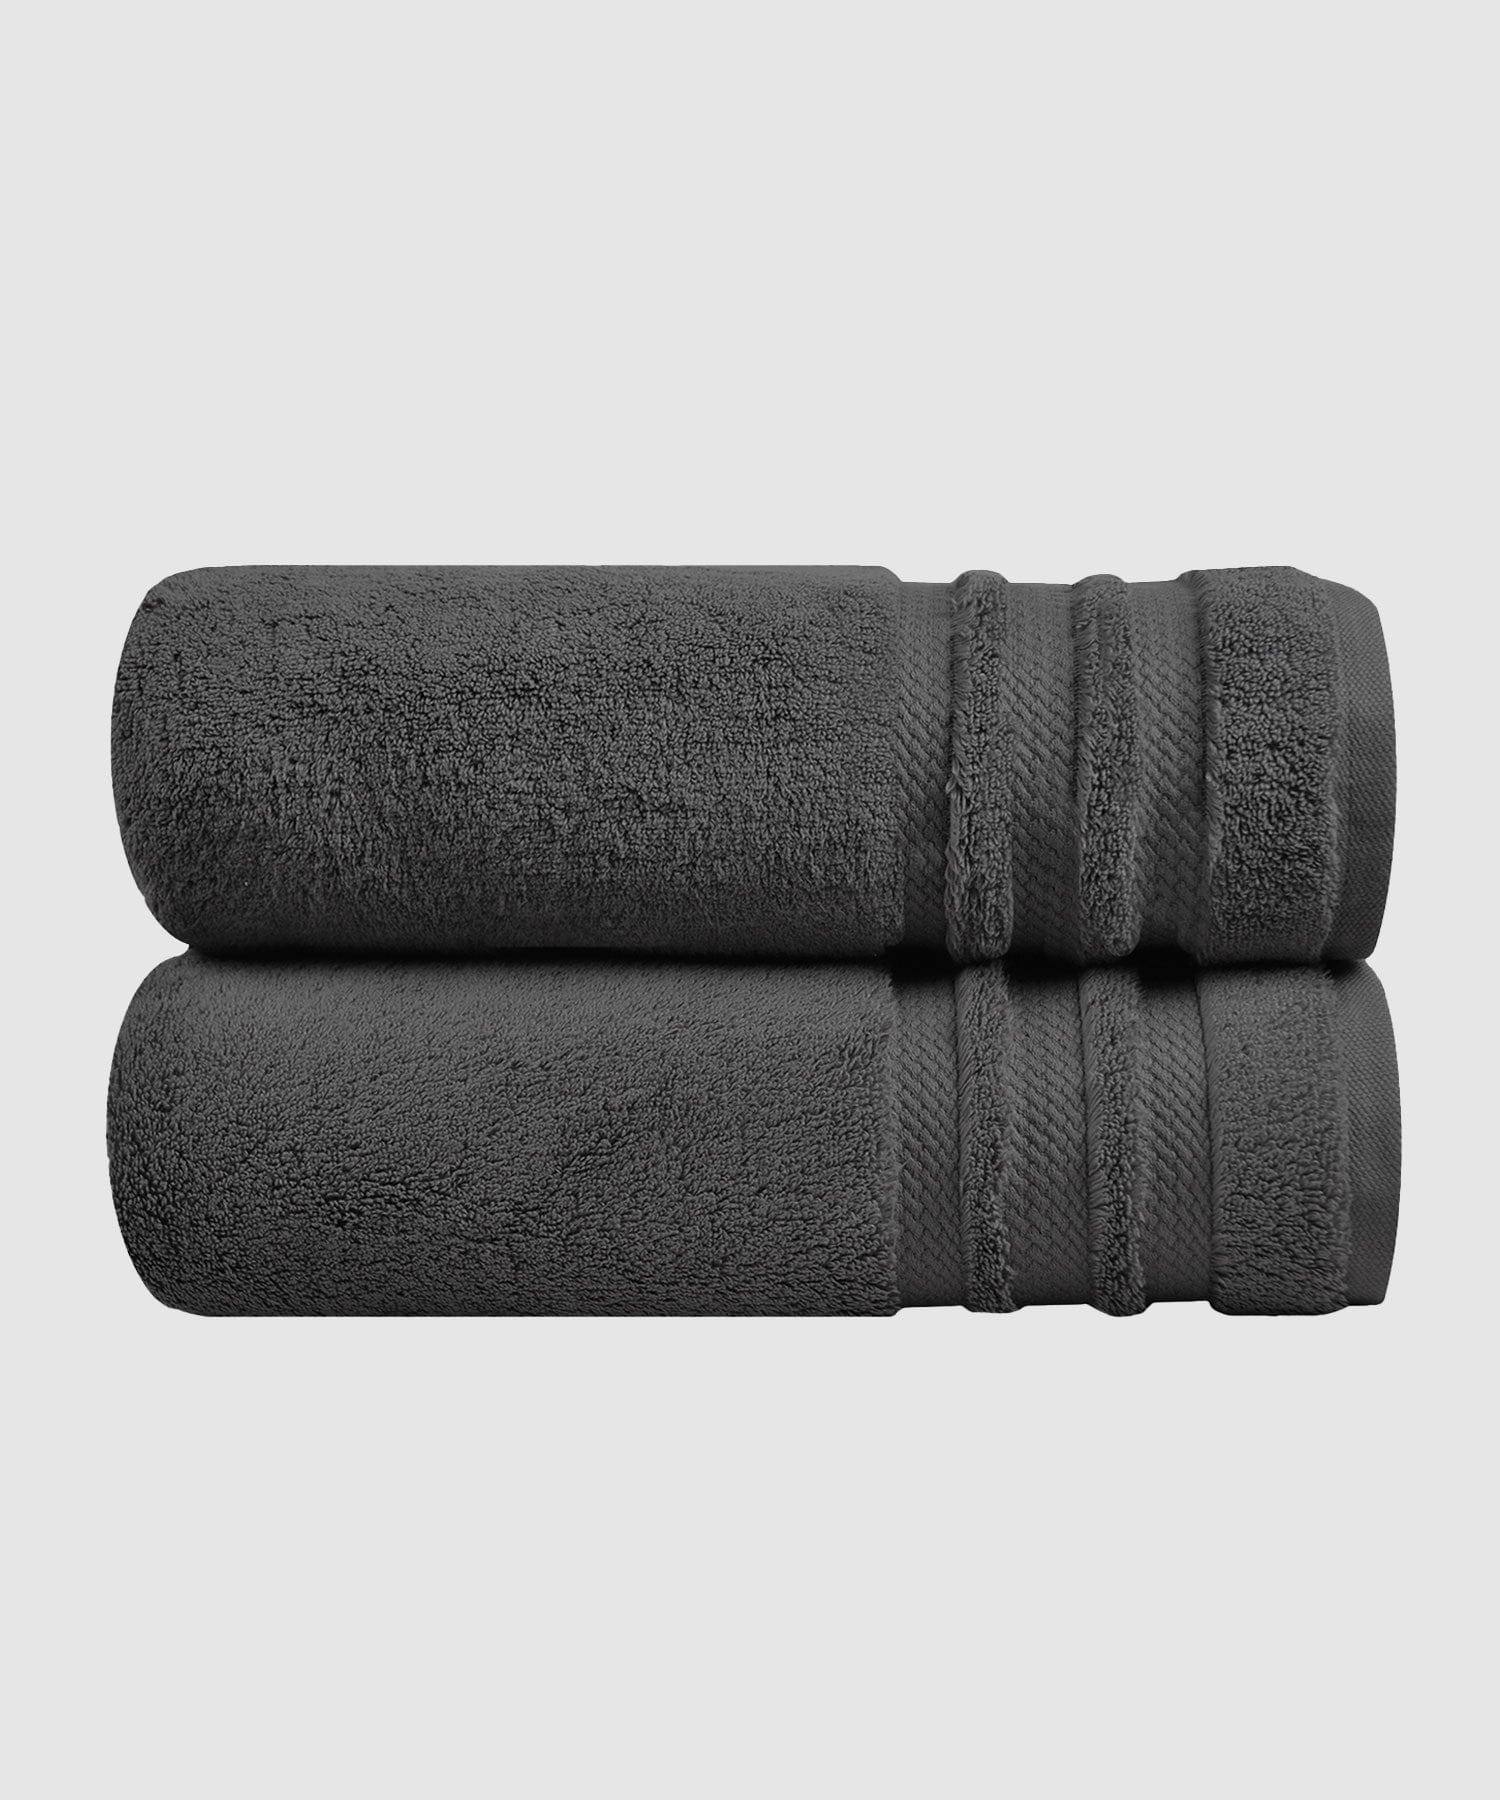 2 Pieces Bath Towels ₹1919/-